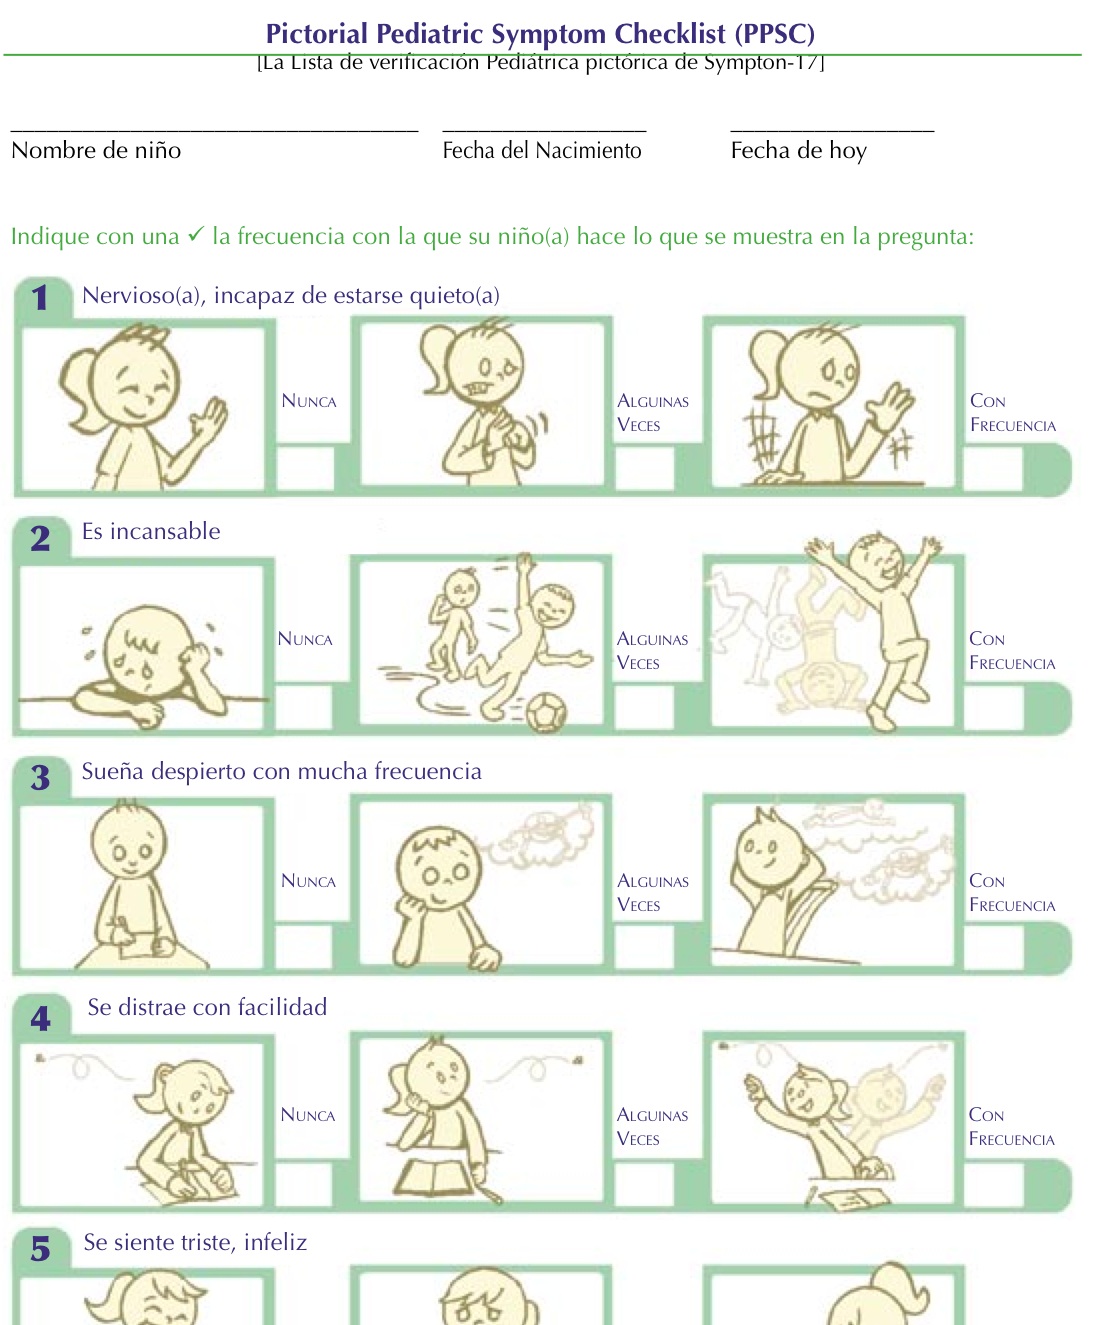 The Pictorial Pediatric Symptom Checklist-17 in Spanish